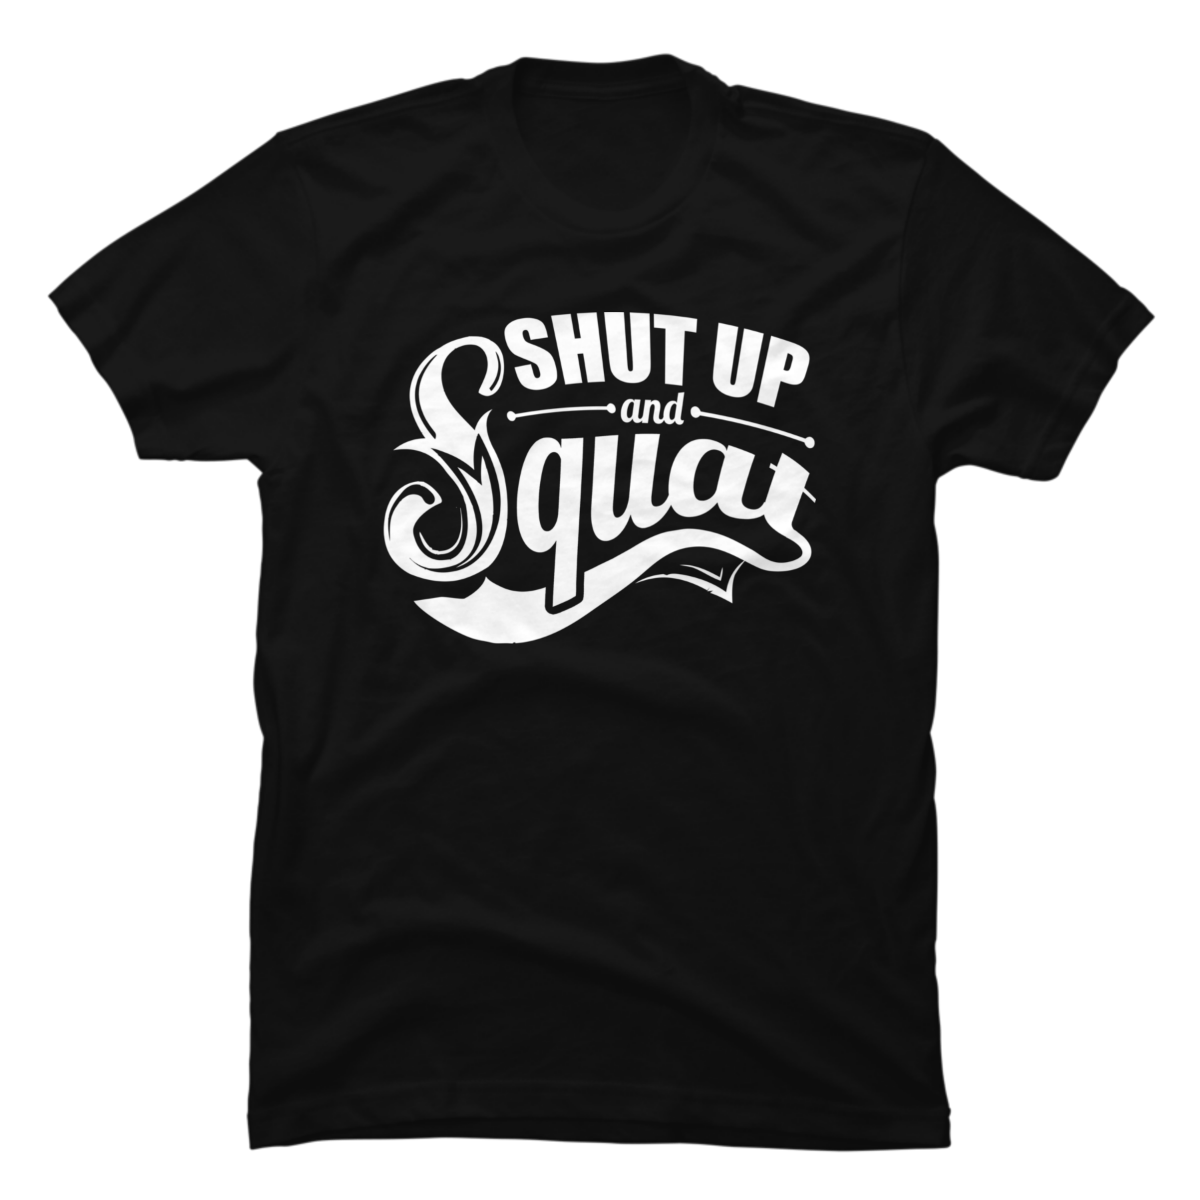 shut up and squat t shirt